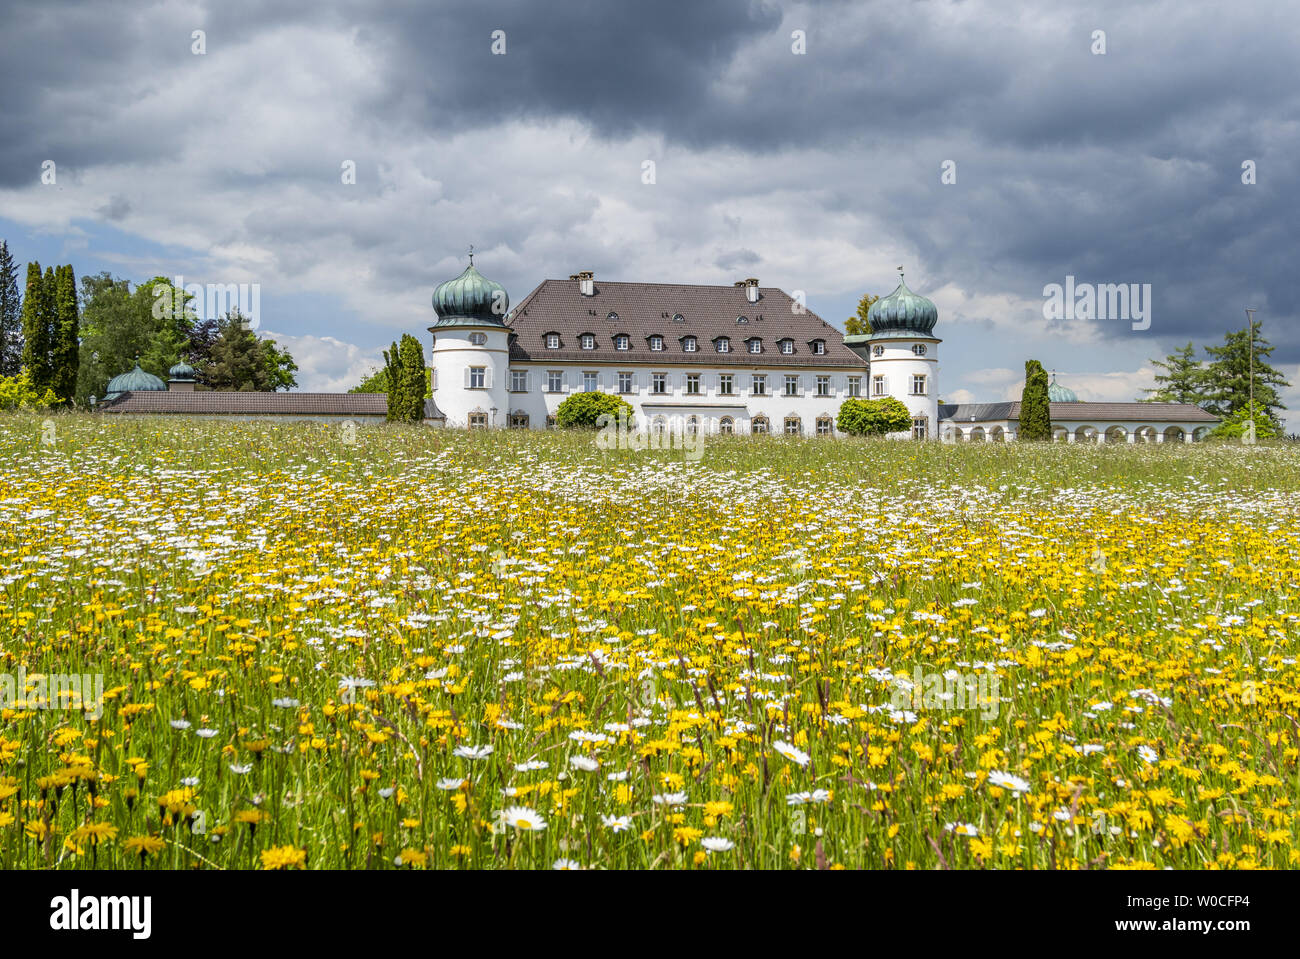 Castle and park Hoehenried, Bavaria, Germany Stock Photo